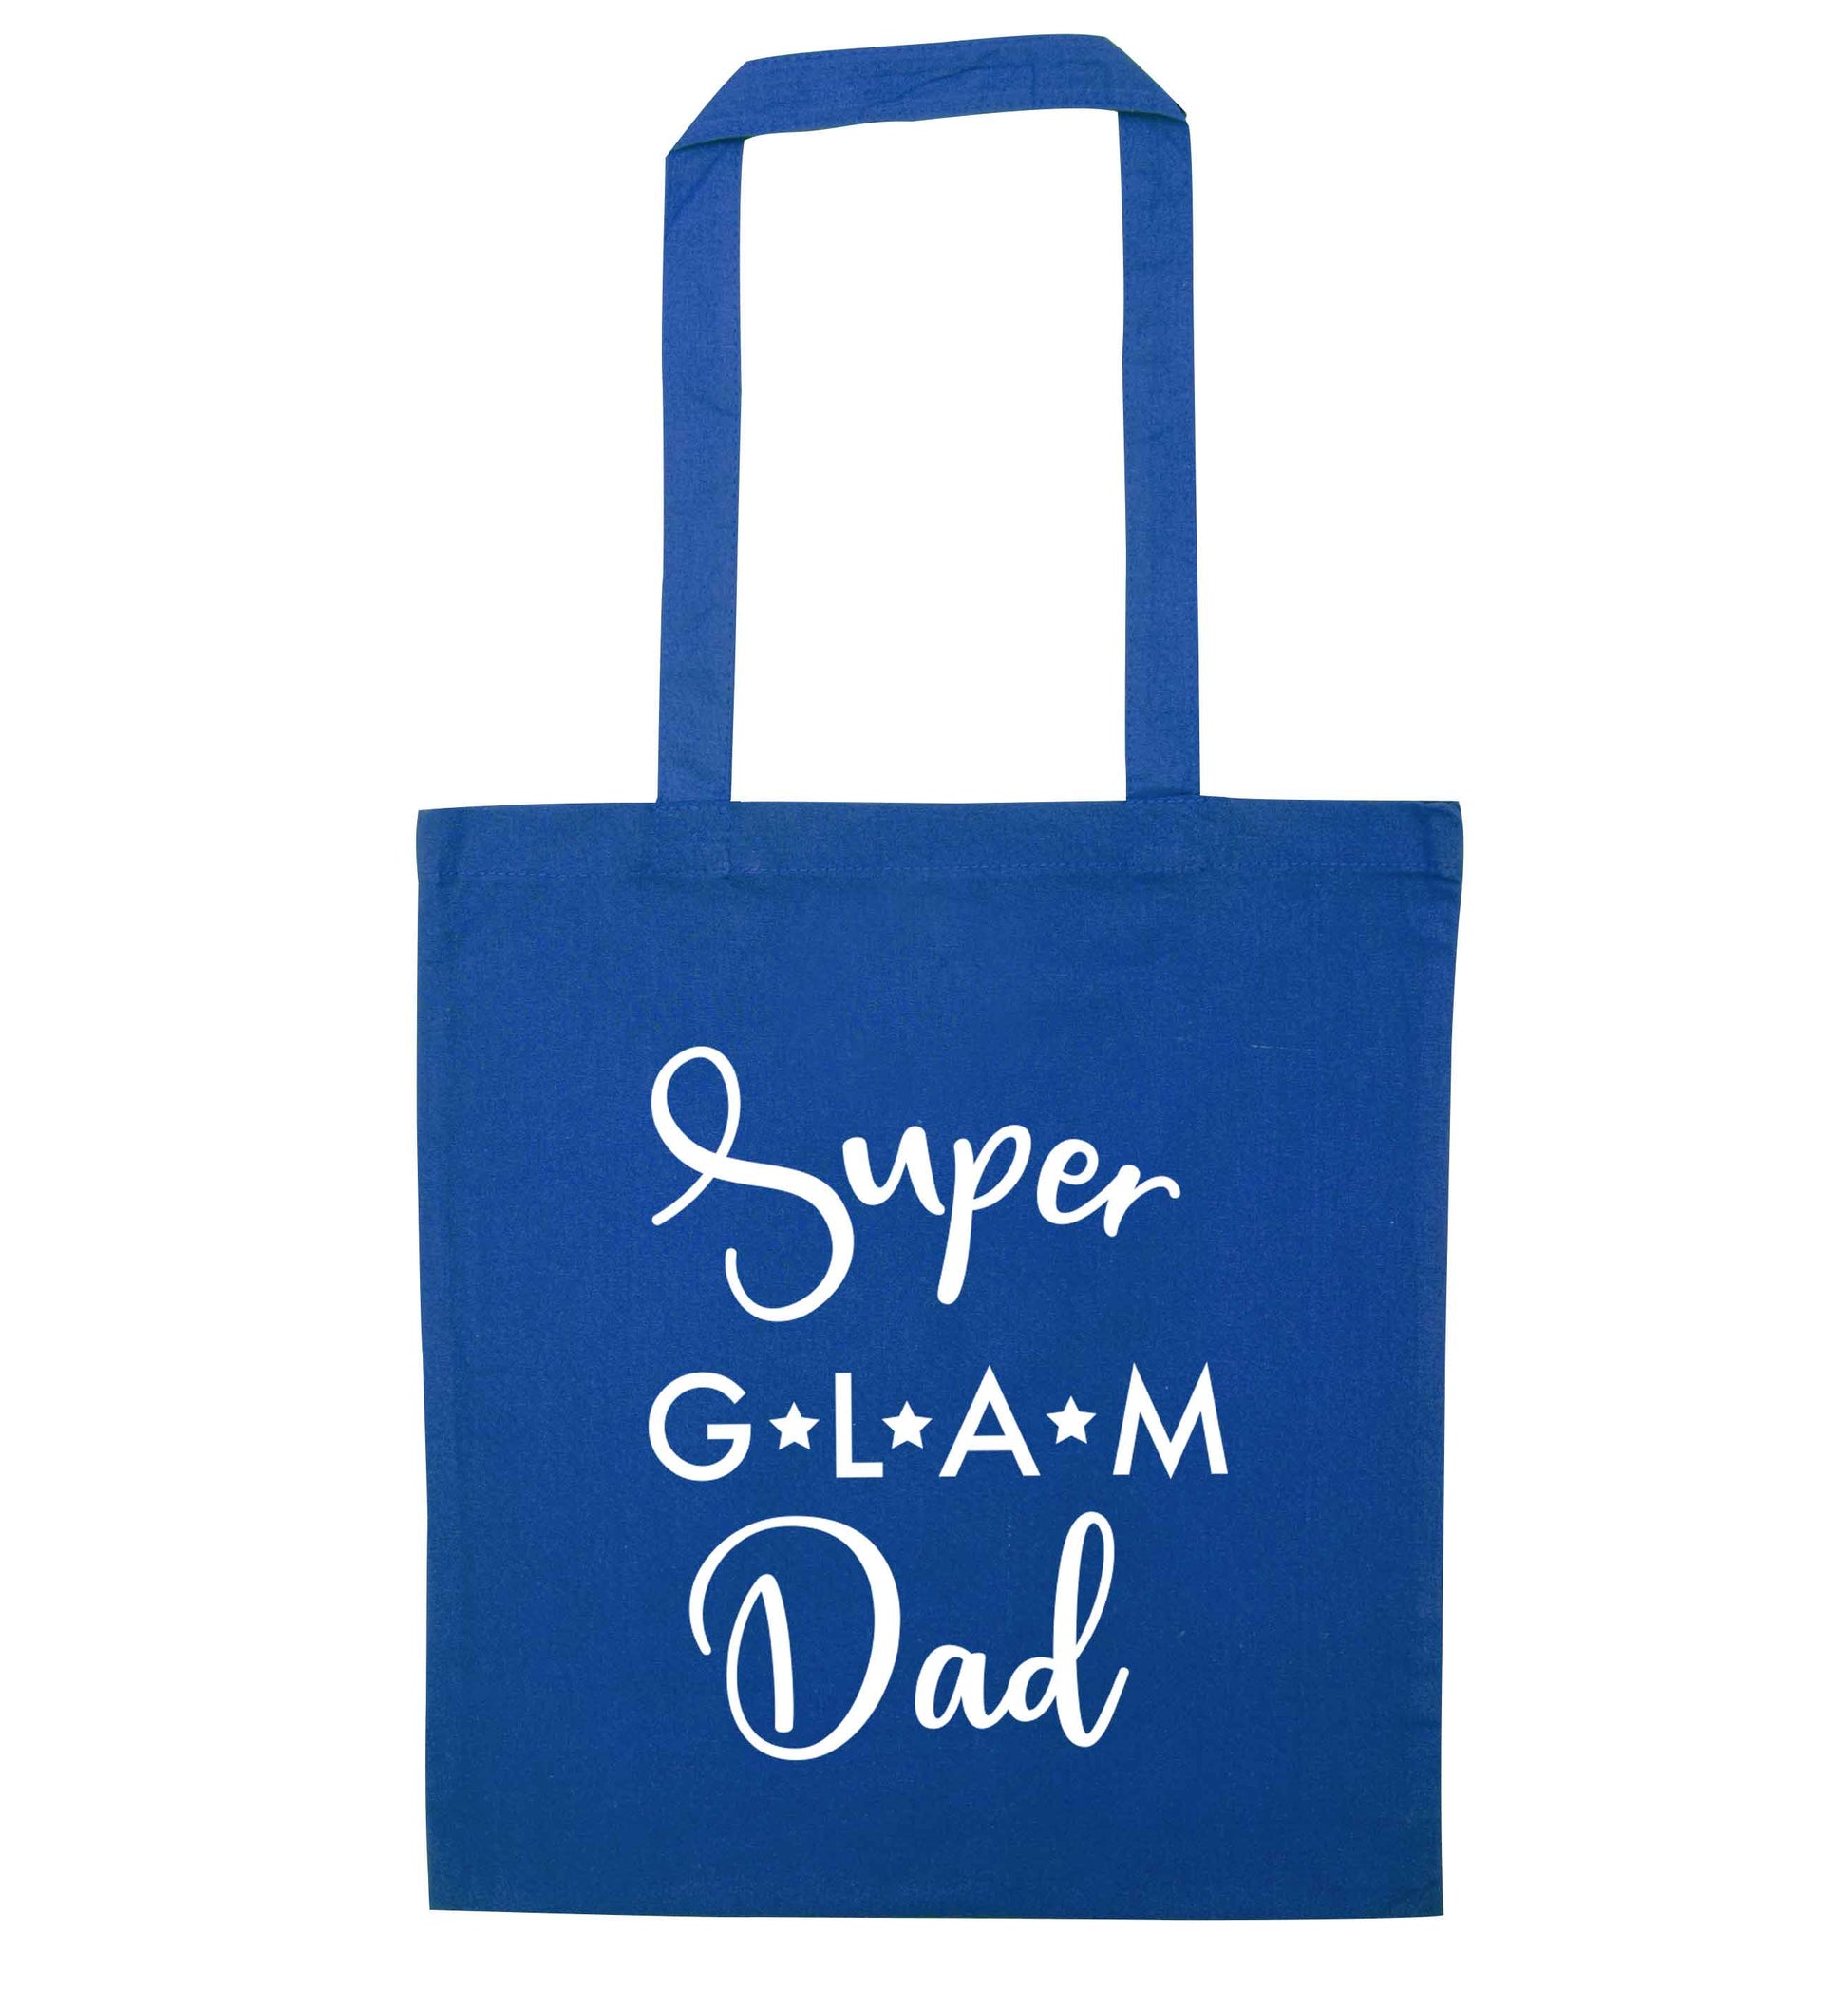 Super glam Dad blue tote bag